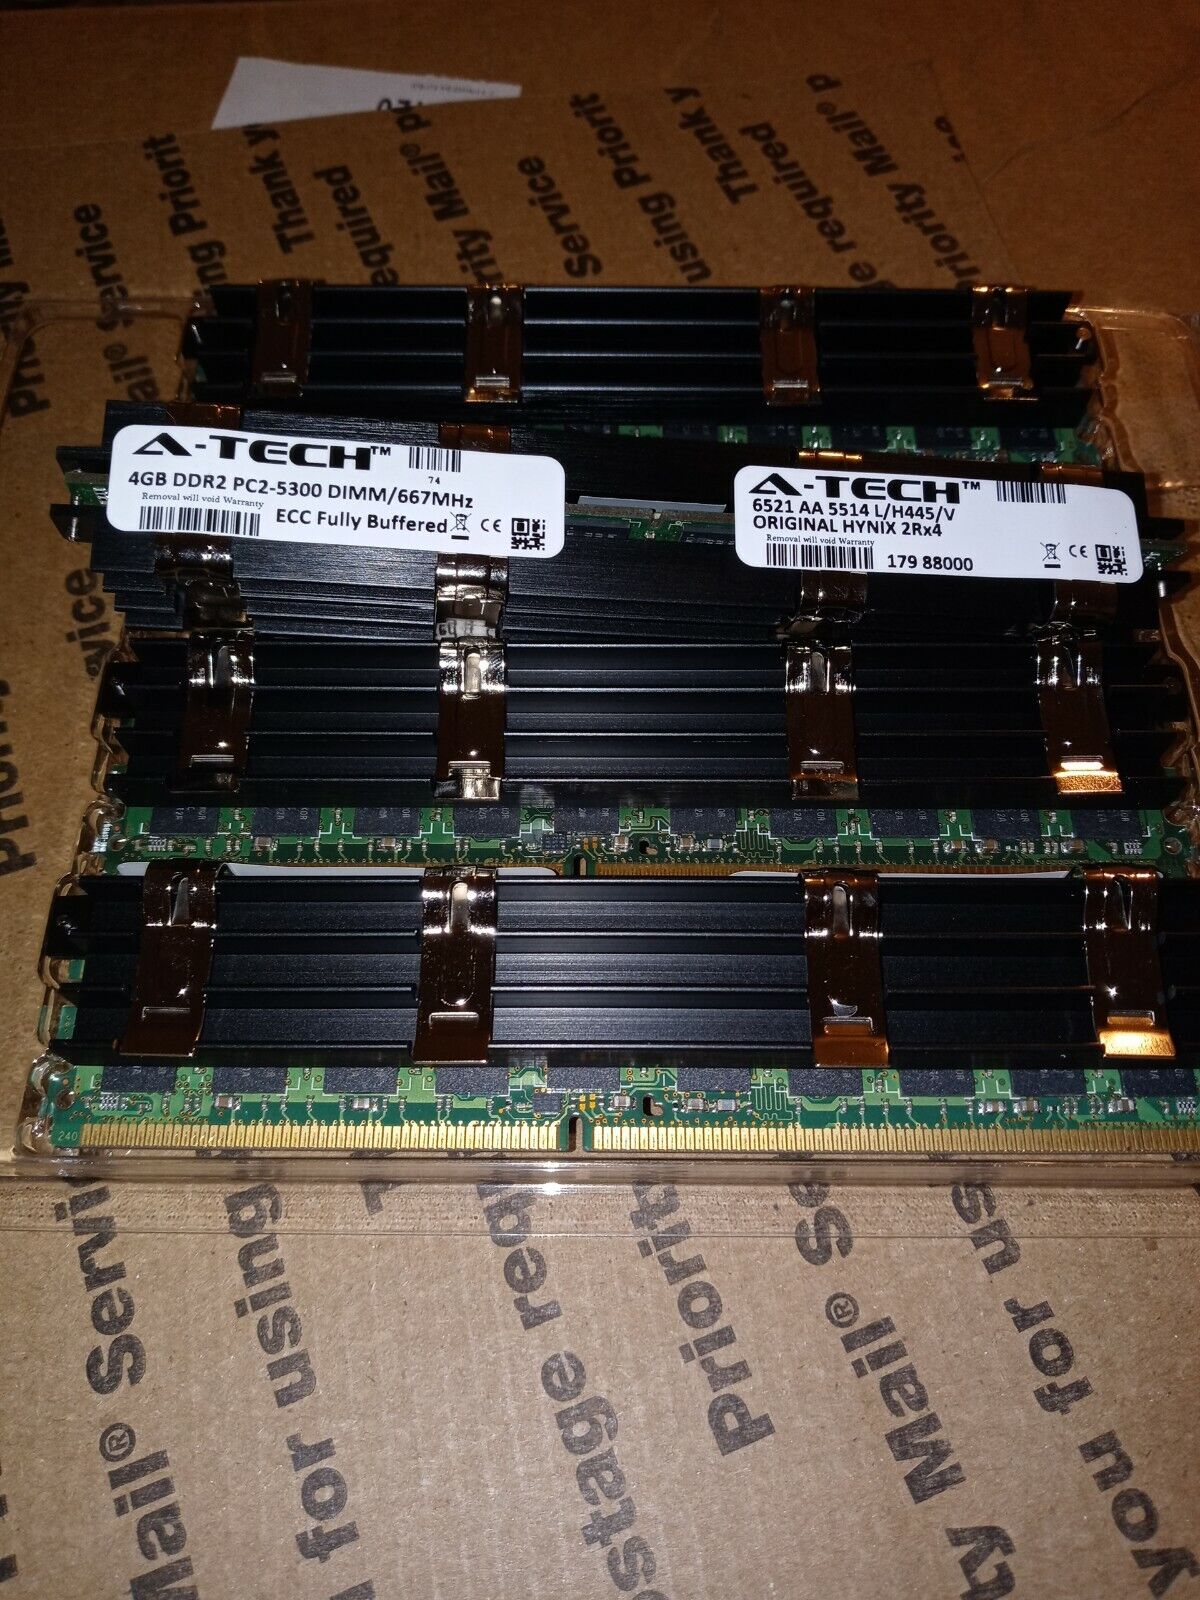 Four A-Tech 4GB Memory DDR2 PC-2 5300 DIMM, 6521 AA 5514 Original Hynix 2Rx4 NEW